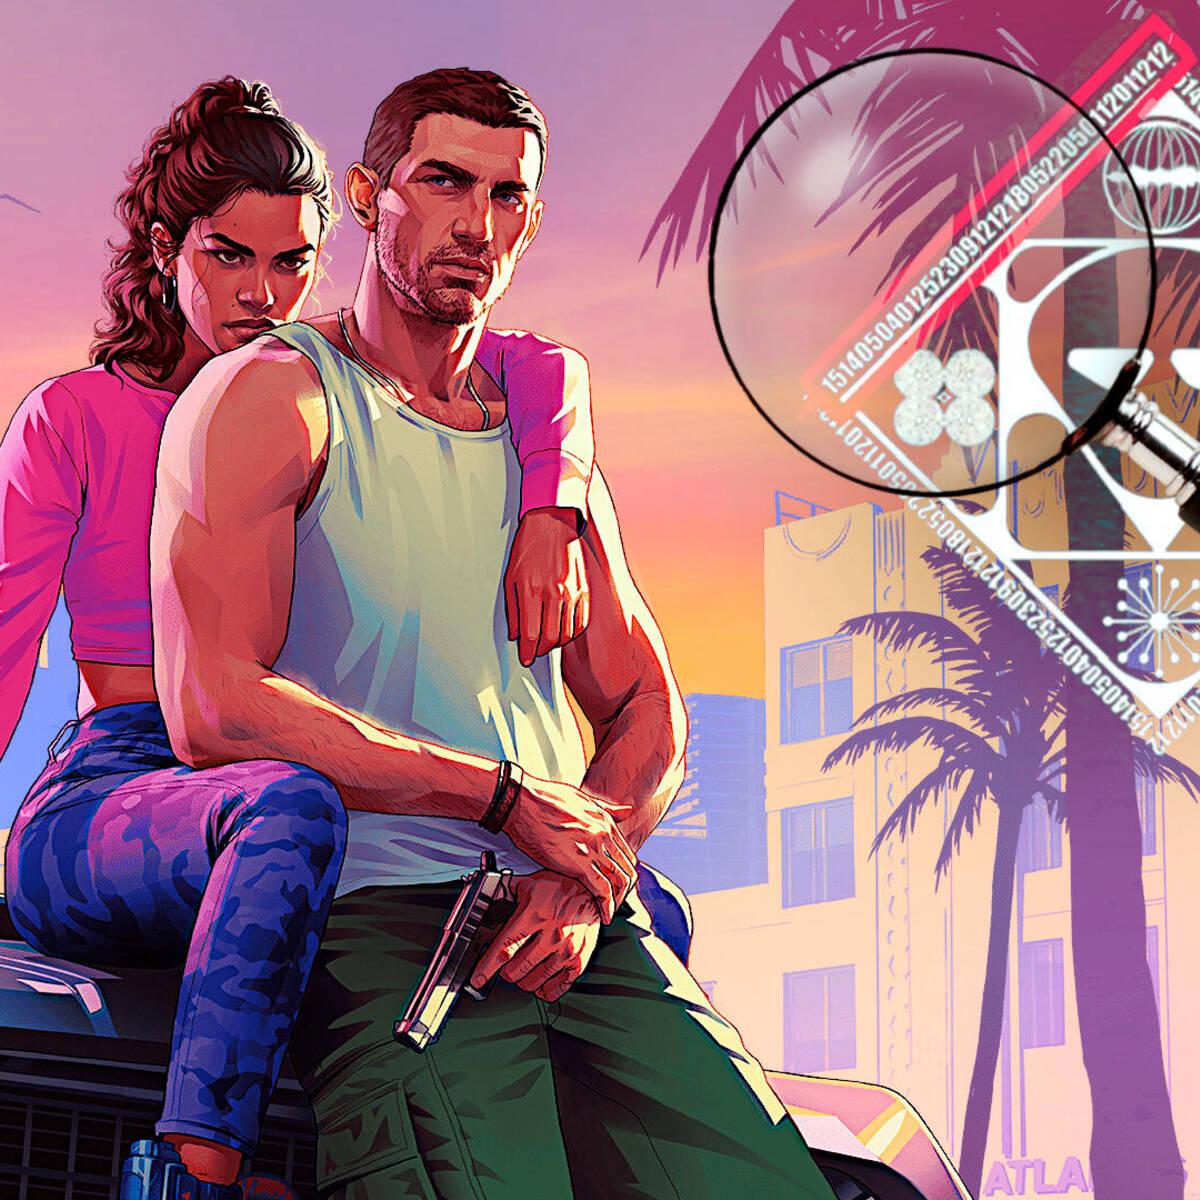 GTA 6 Trailer Countdown ⏳ on X: Do you think Rockstar Games will